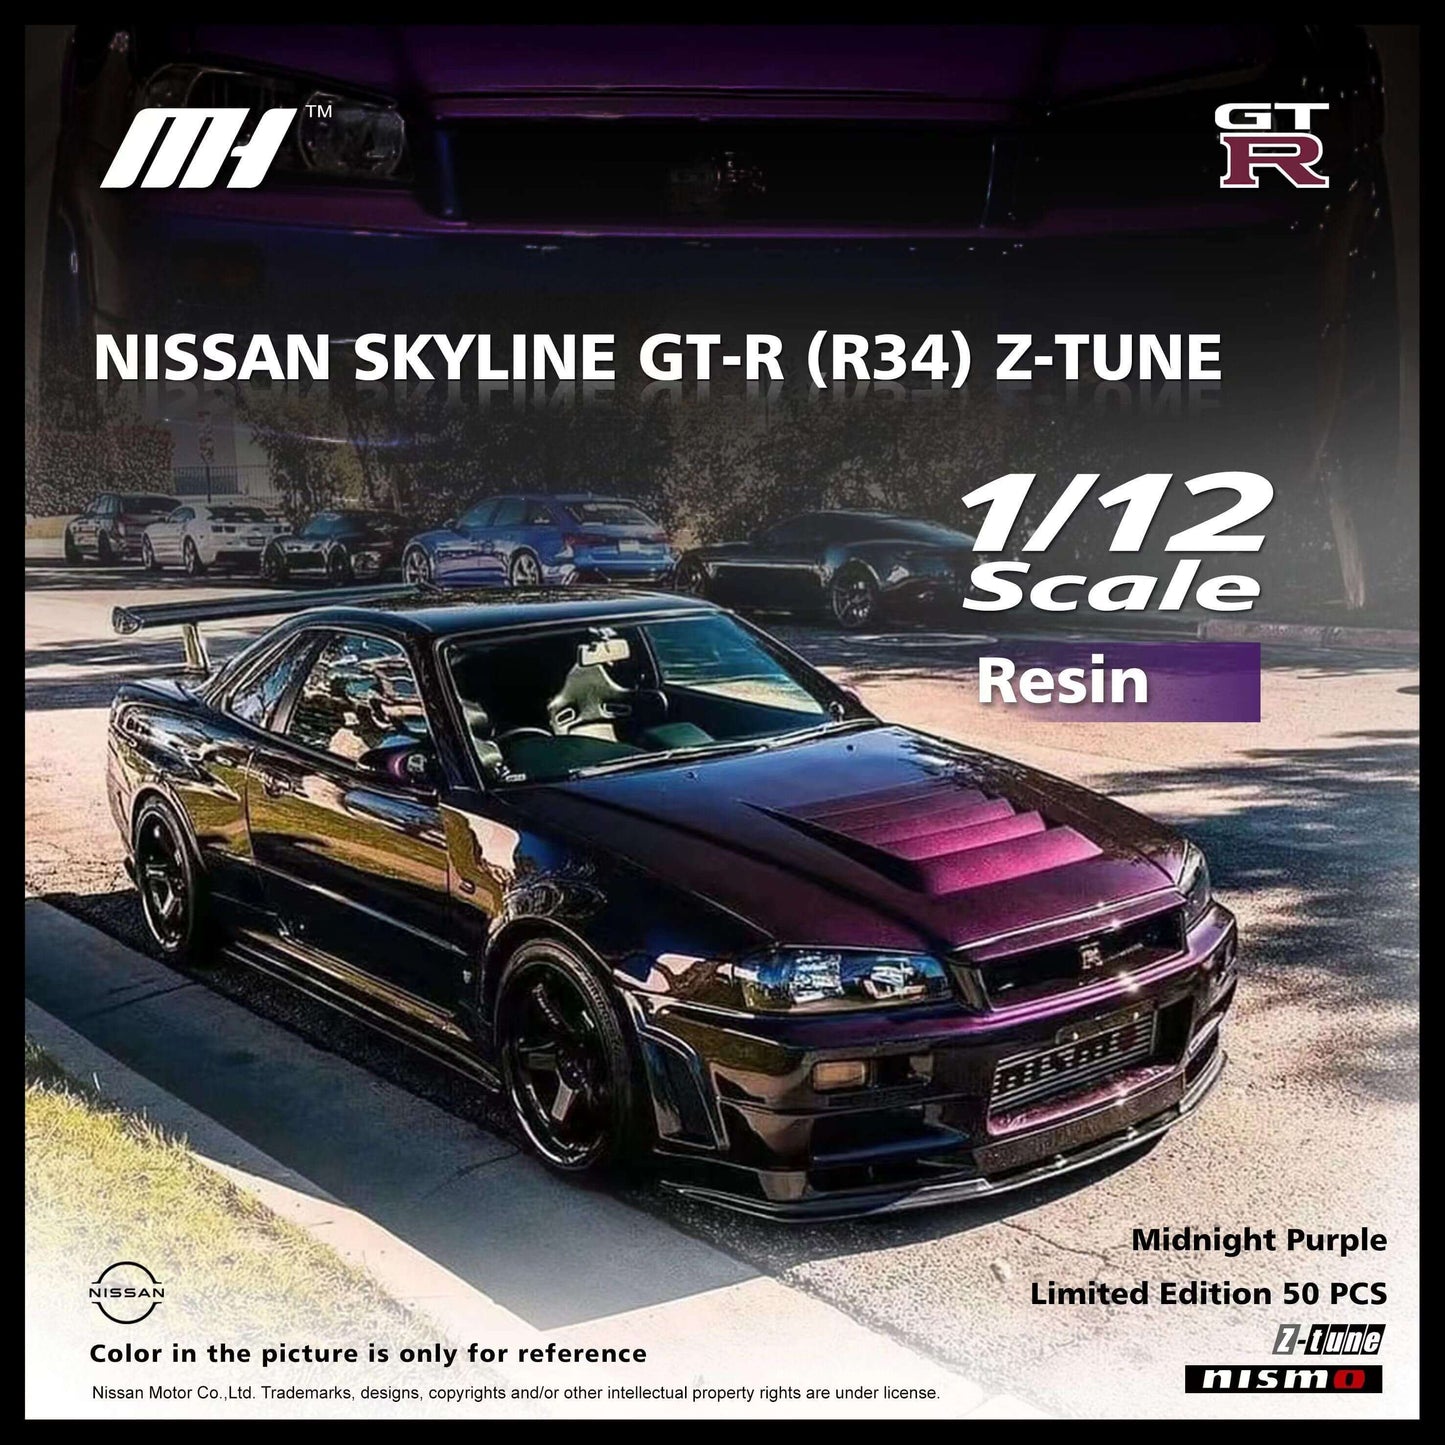 Nissan GTR R34 Z-tune 1:12 Sports Car Limited Edition Resin Model Car